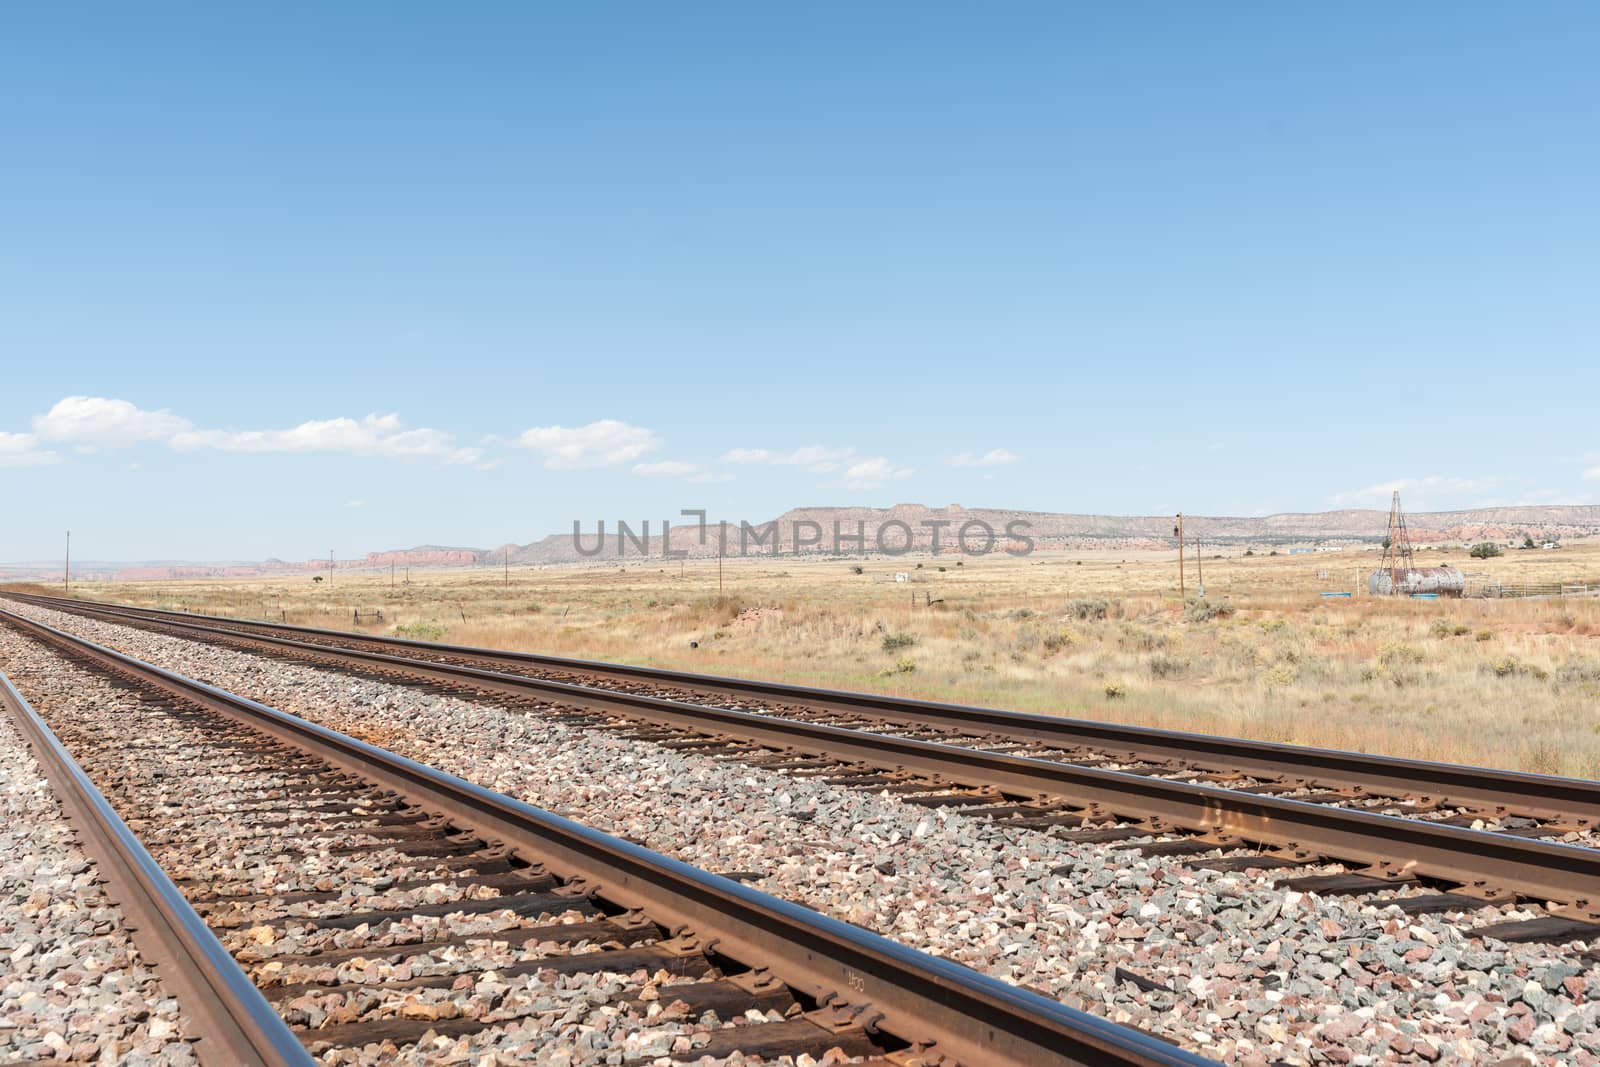  New Mexico high plains landscapes alongside Route 66. by brians101